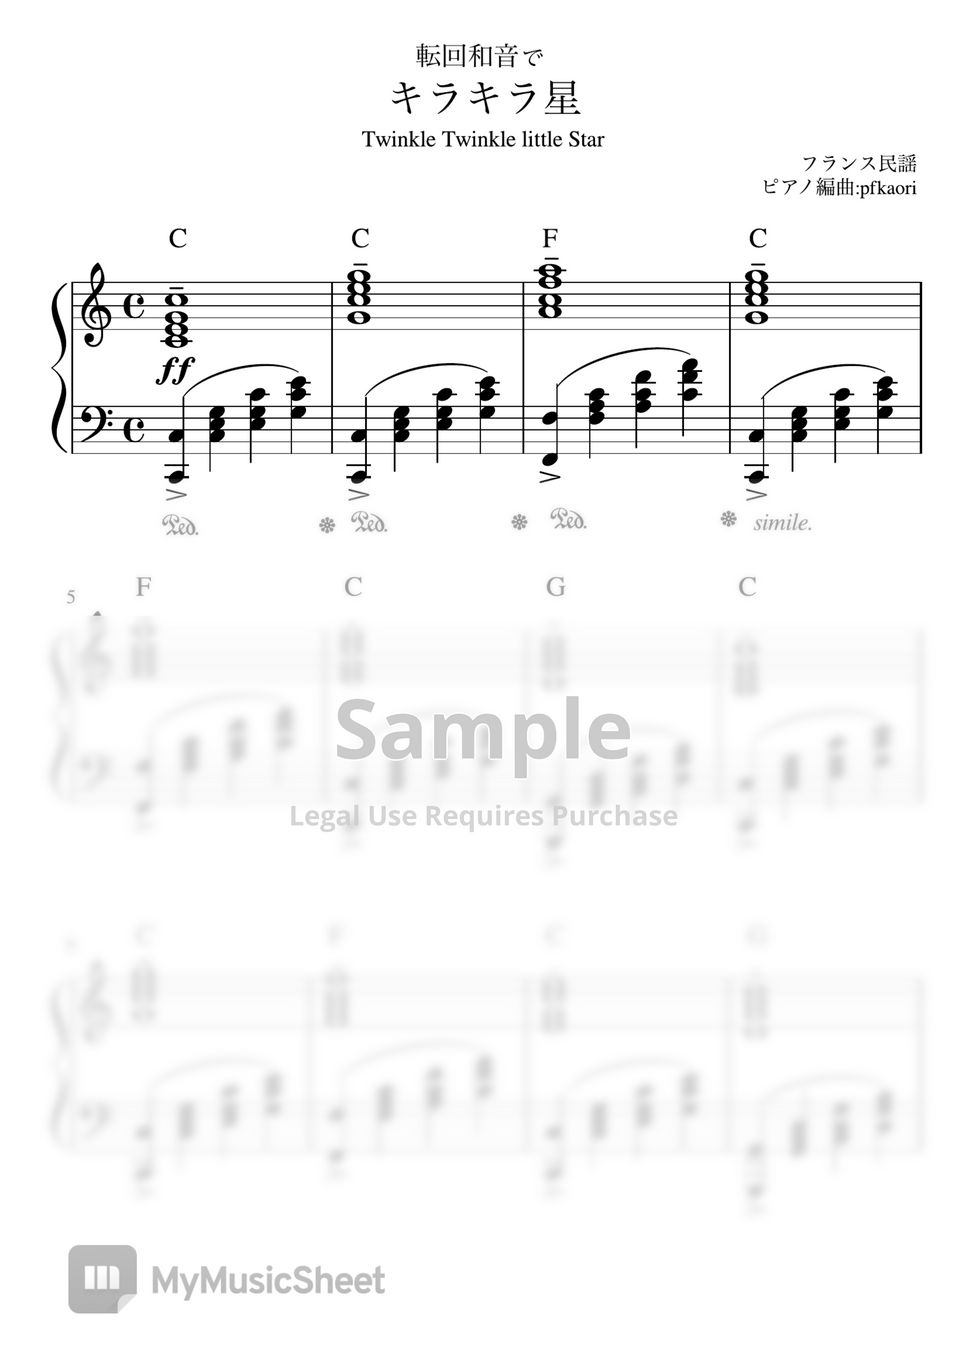 "Twinkle twinkle little star'' in the inverted chord (pianosolo intermediate) by pfkaori